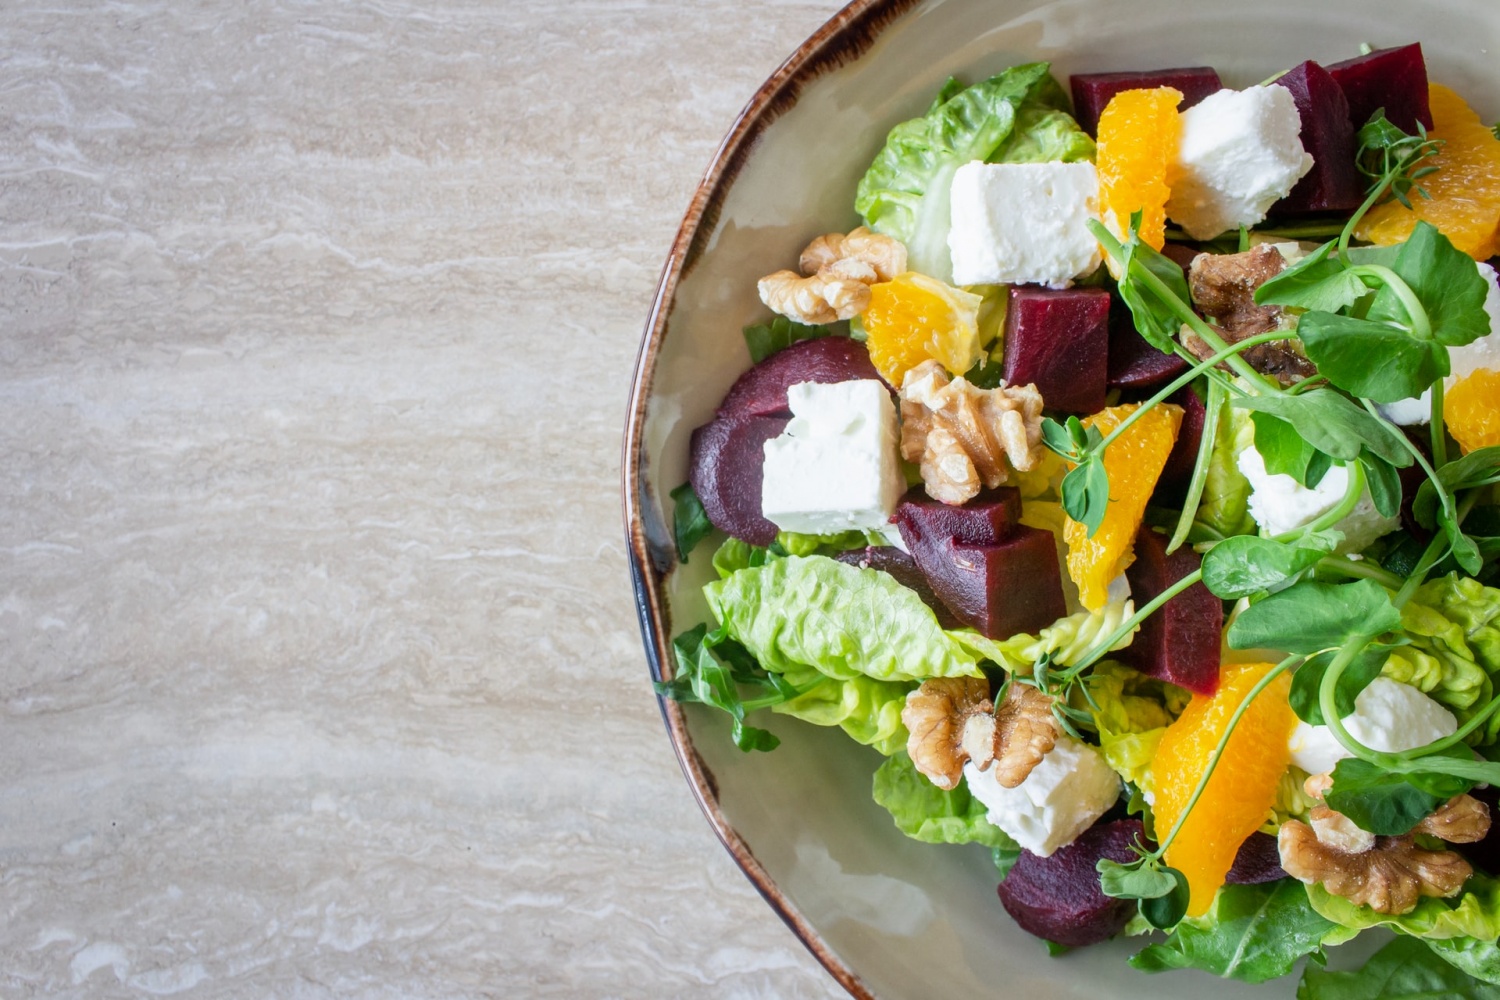 Dole Salad Bags: FDA Finds Bacteria